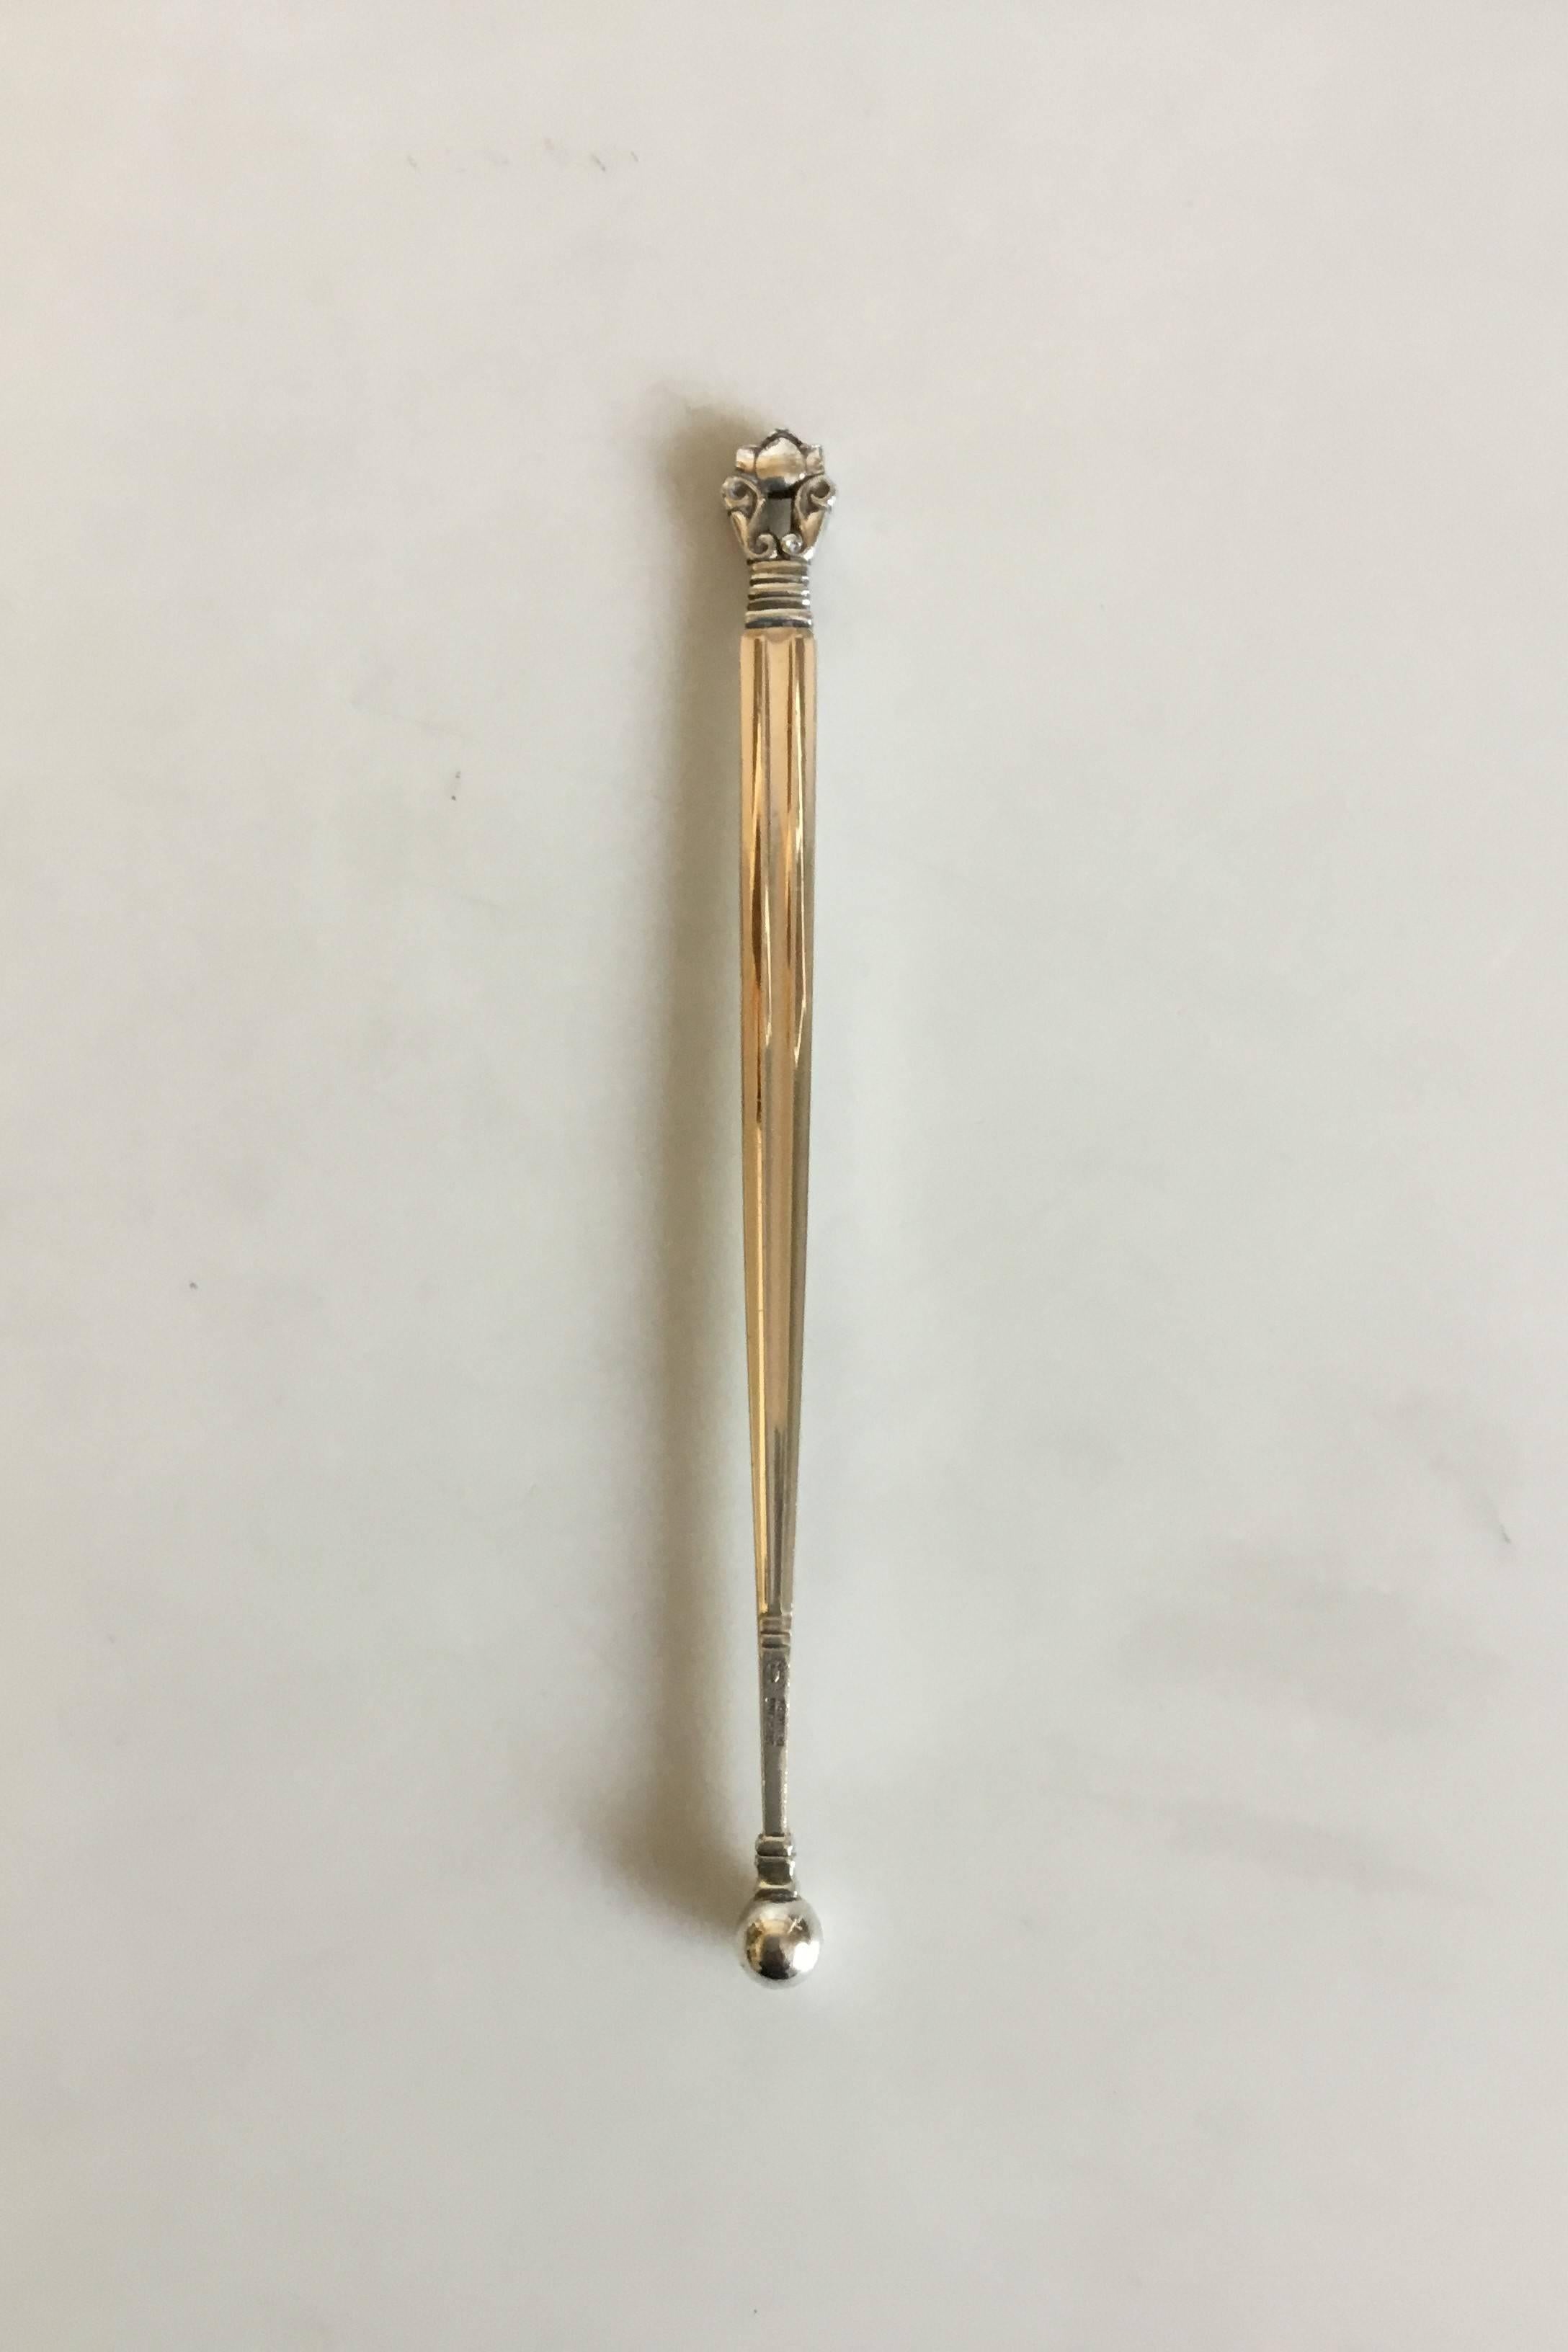 Georg Jensen sterling silver acorn drink stick.
Measures: 14.9 cm / 5 55/64 in.